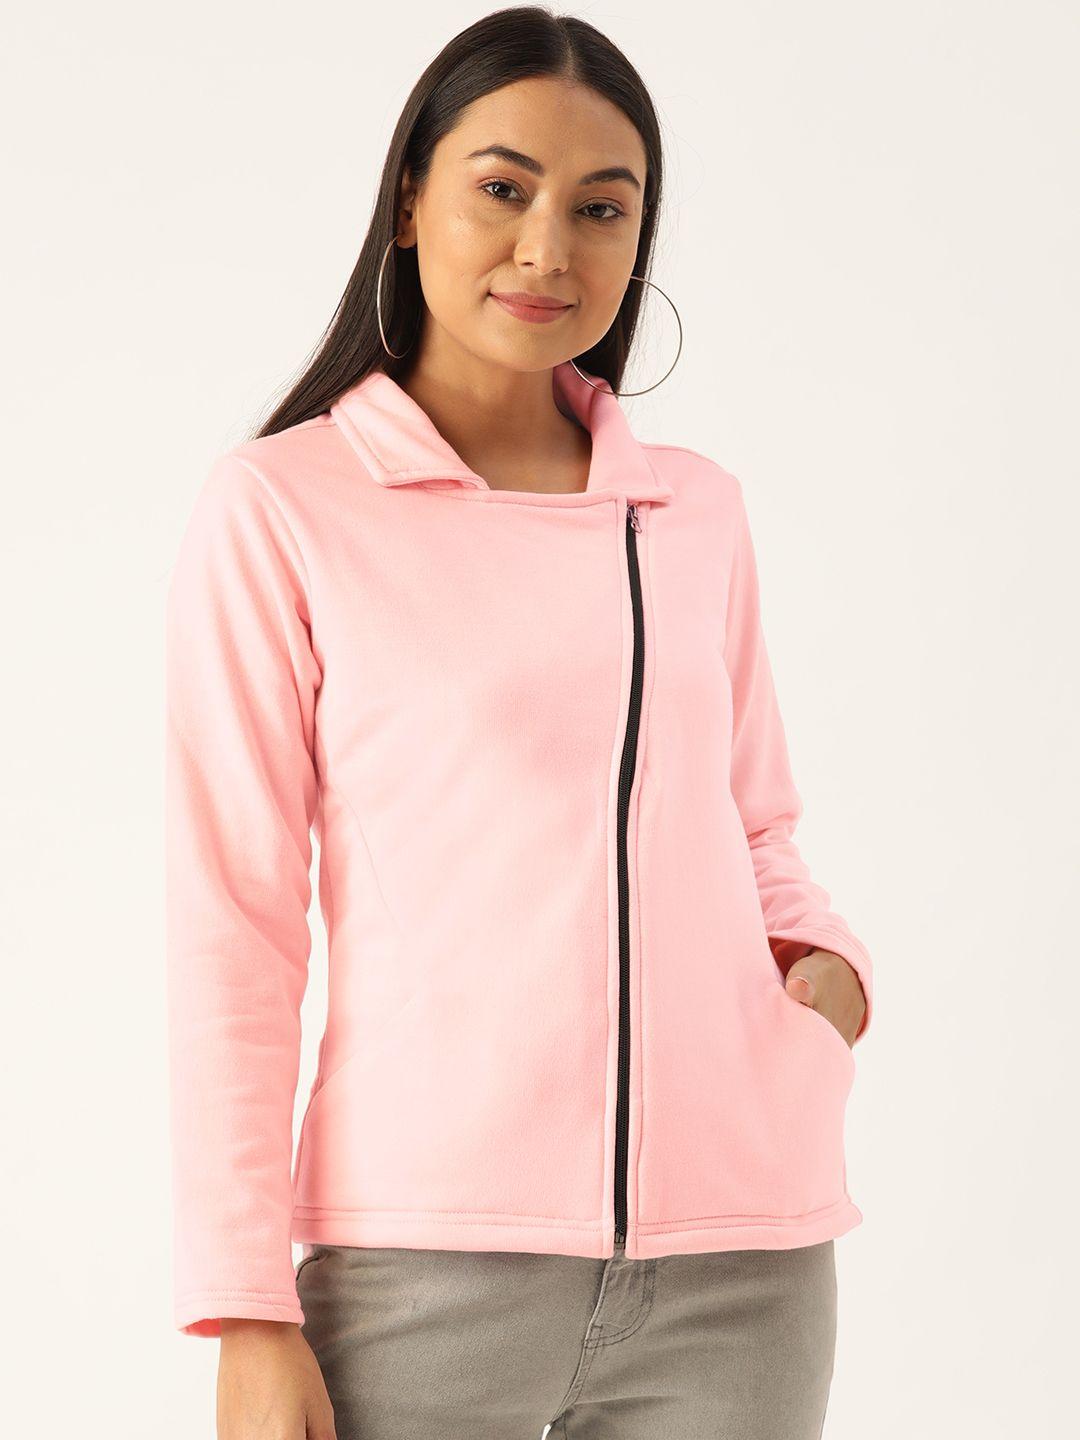 belle-fille-pink-solid-tailored-jacket